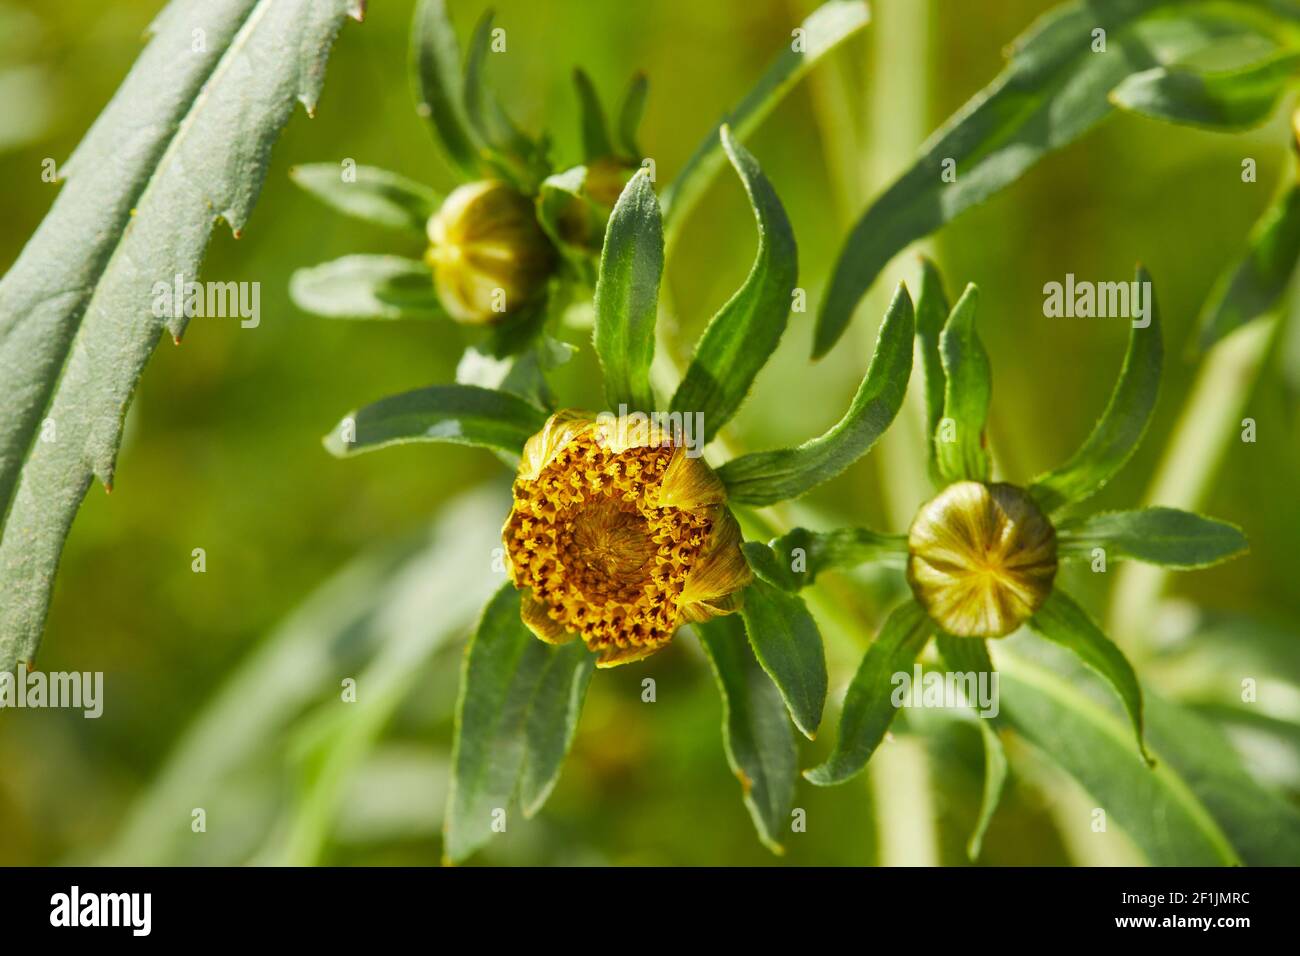 Bidens tripartita close up, Three-lobe Beggarticks is growing in it's natural habitat, medicinal plant Stock Photo